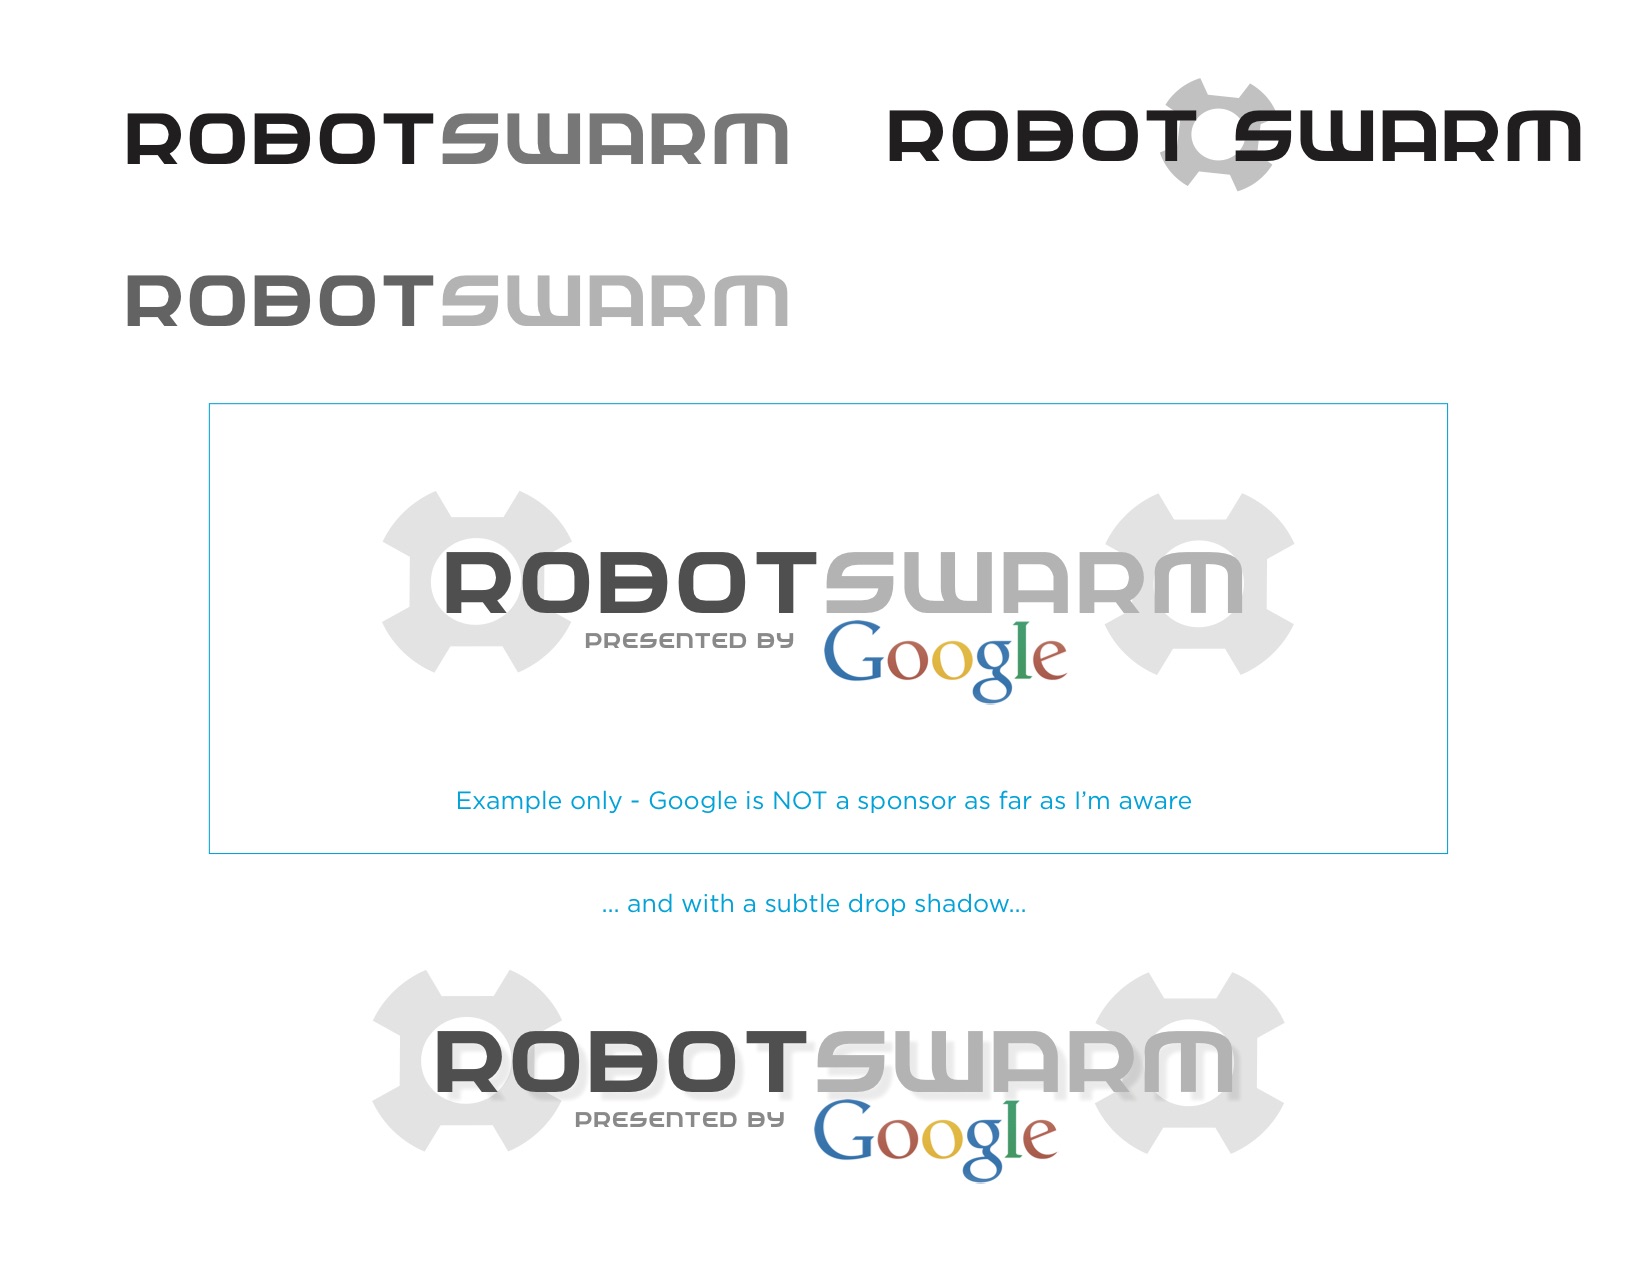 robotswarm logo concepts